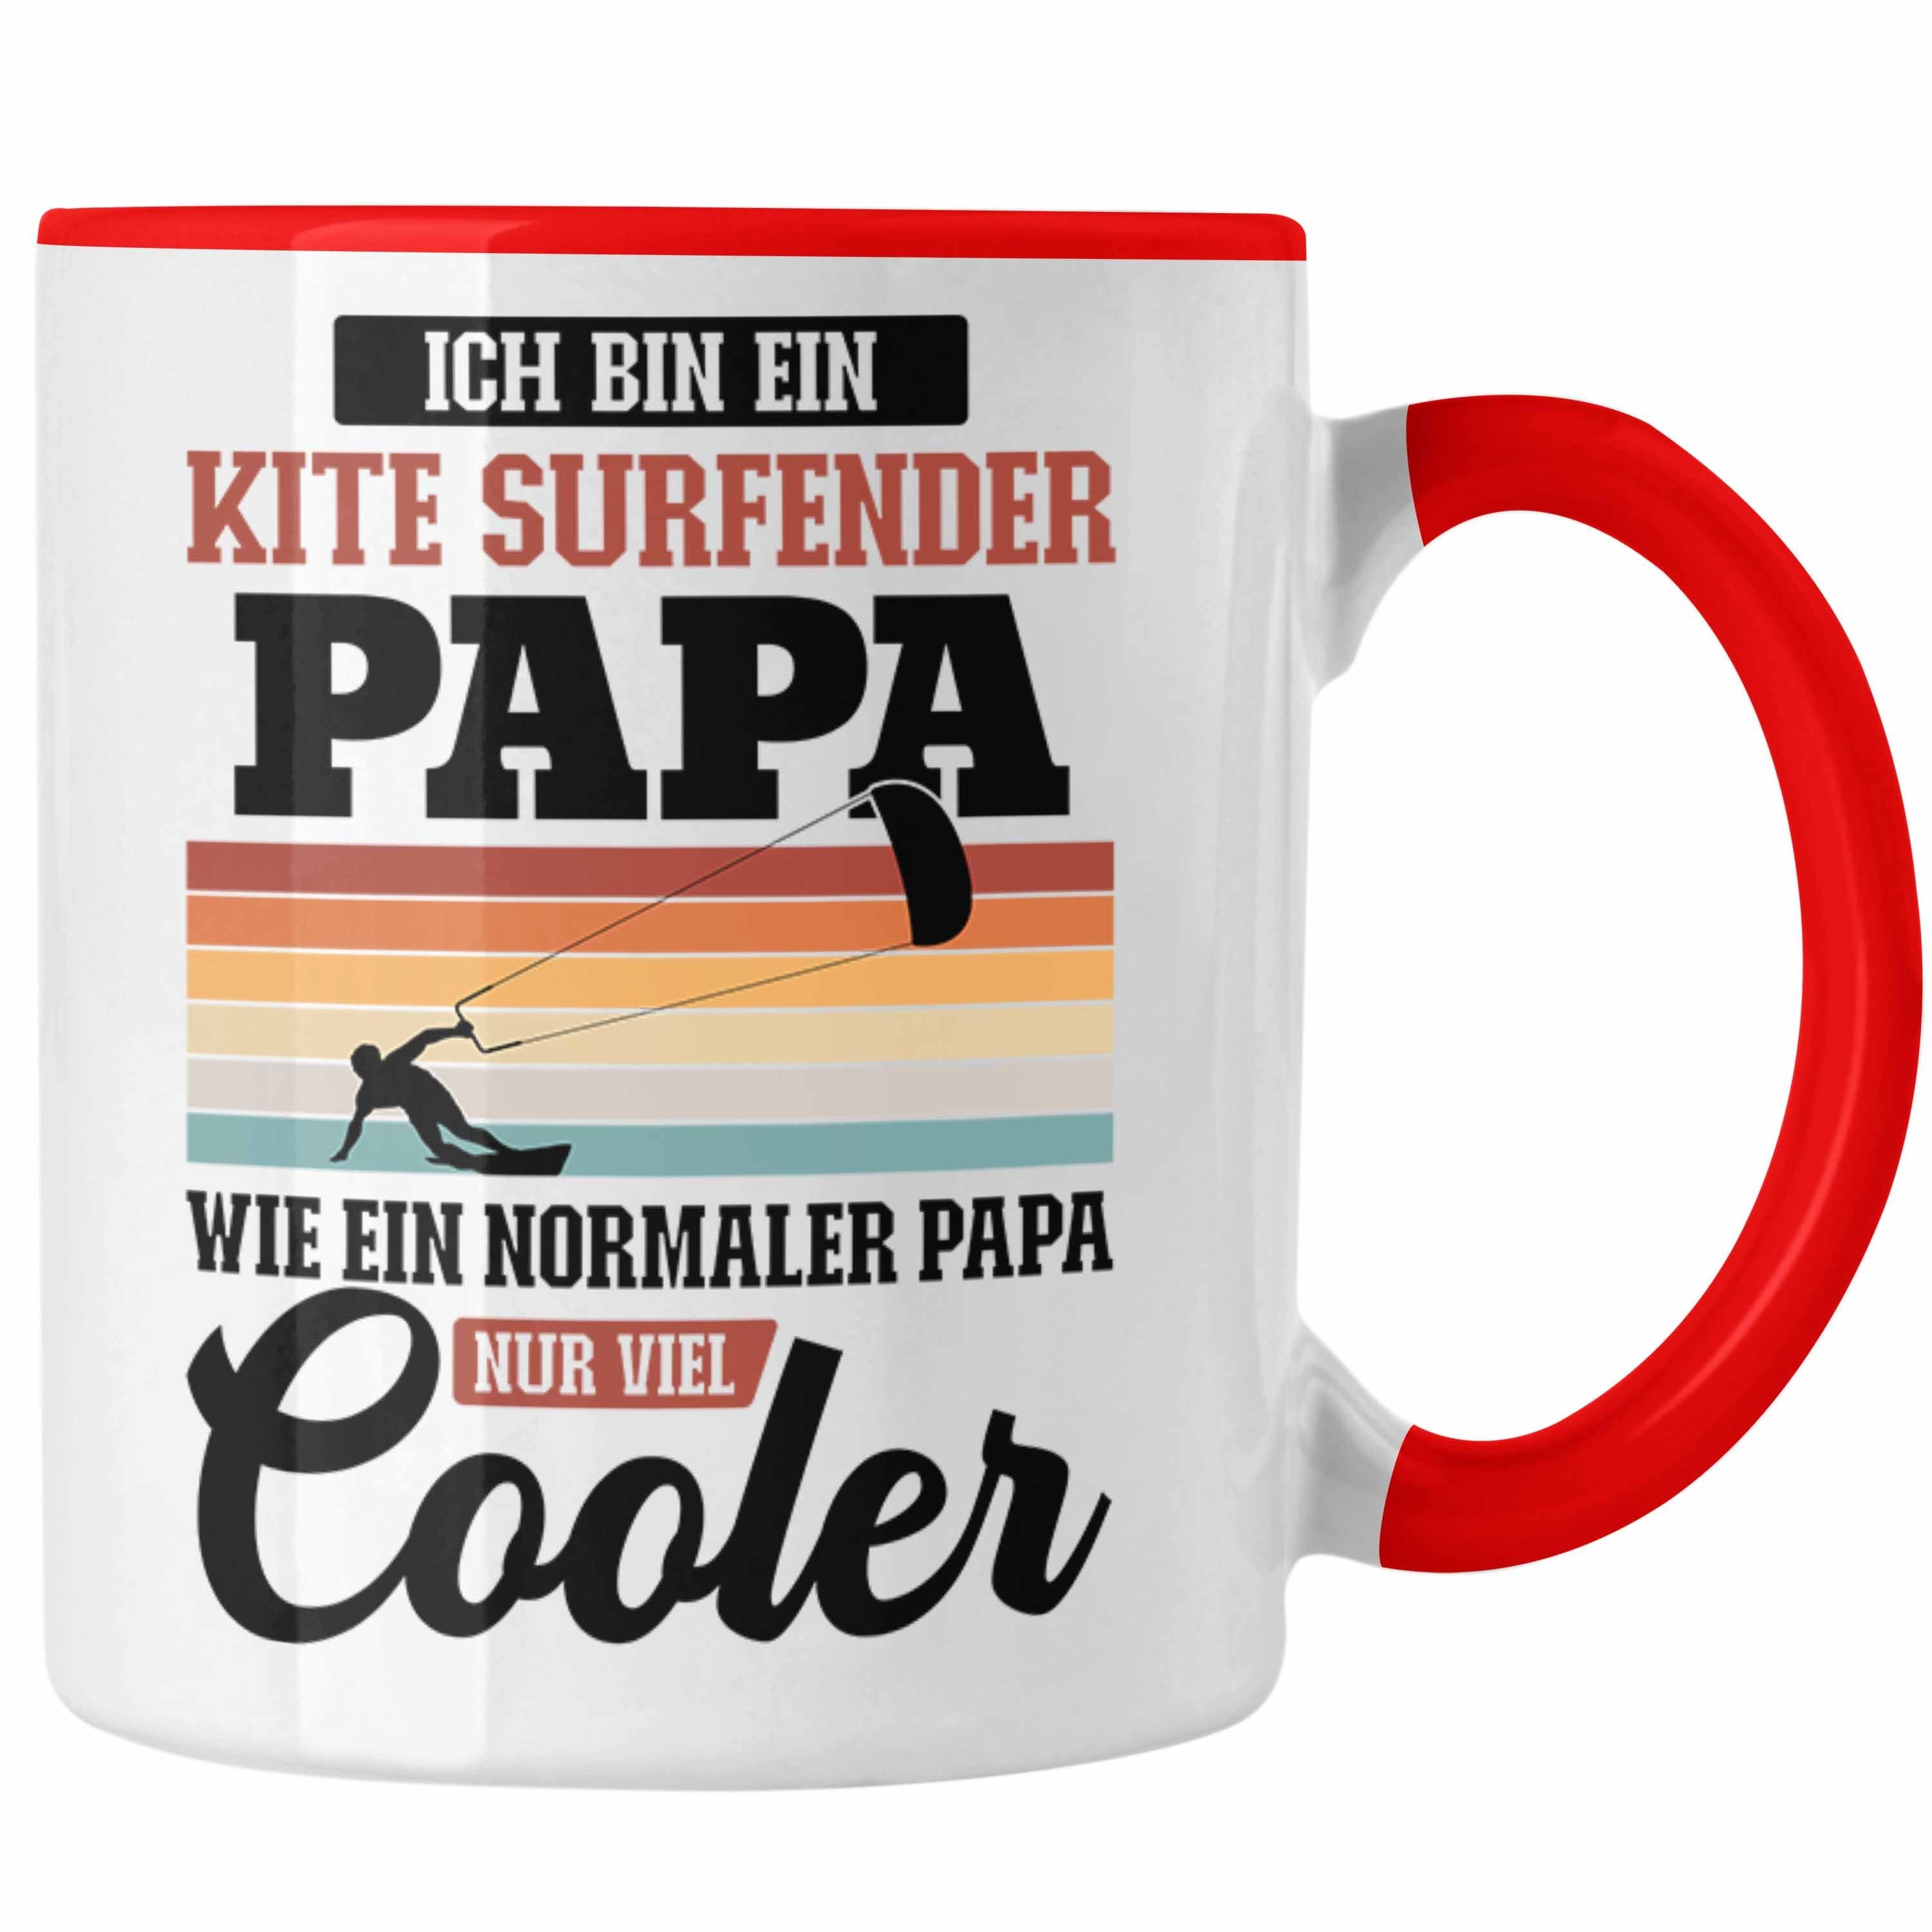 Trendation Tasse Trendation Kitesurfen Papa Papa Kitesurfing Vater Rot - Kitesurf Kite Tasse Geschenk Surfender